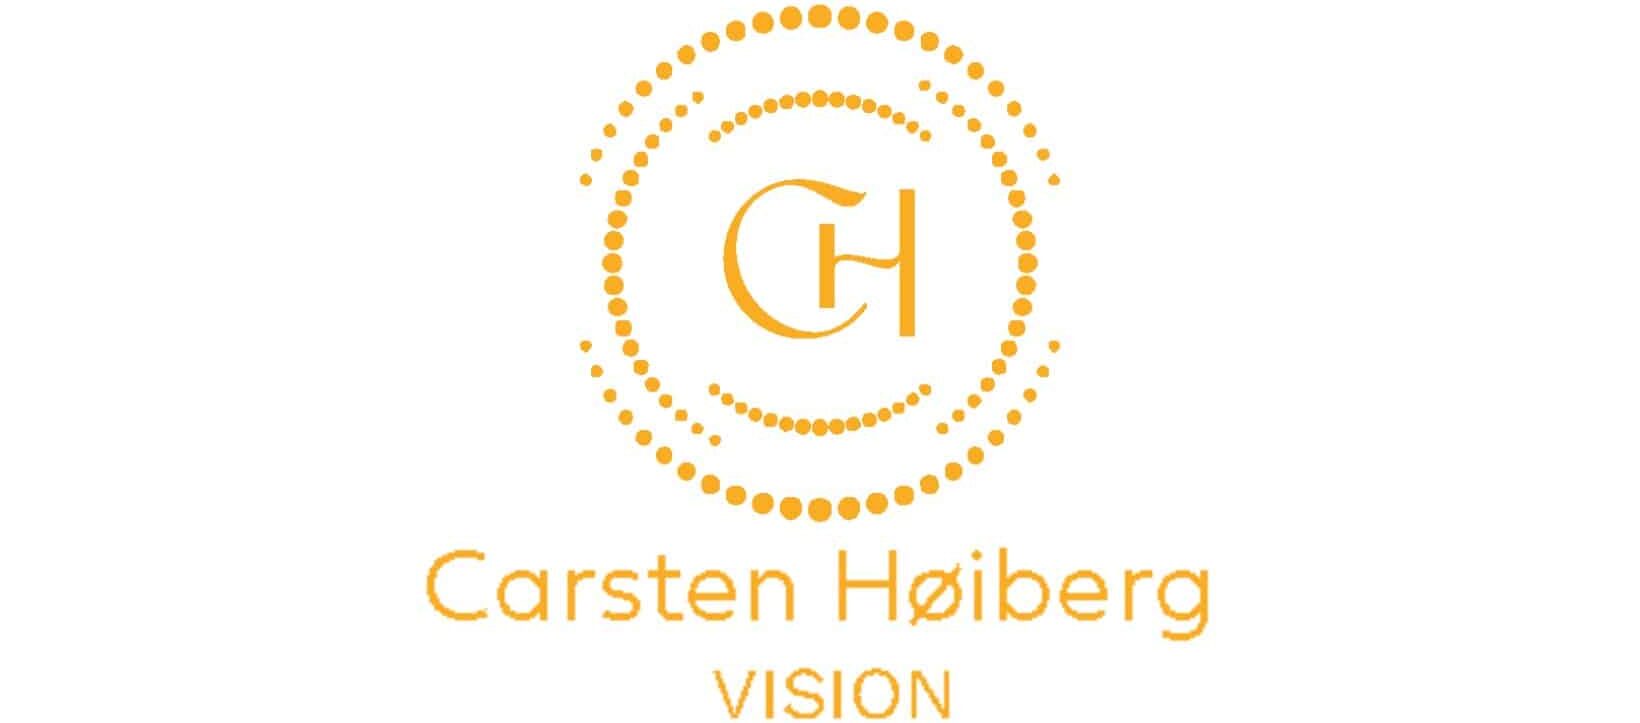 Carsten Høiberg Vision